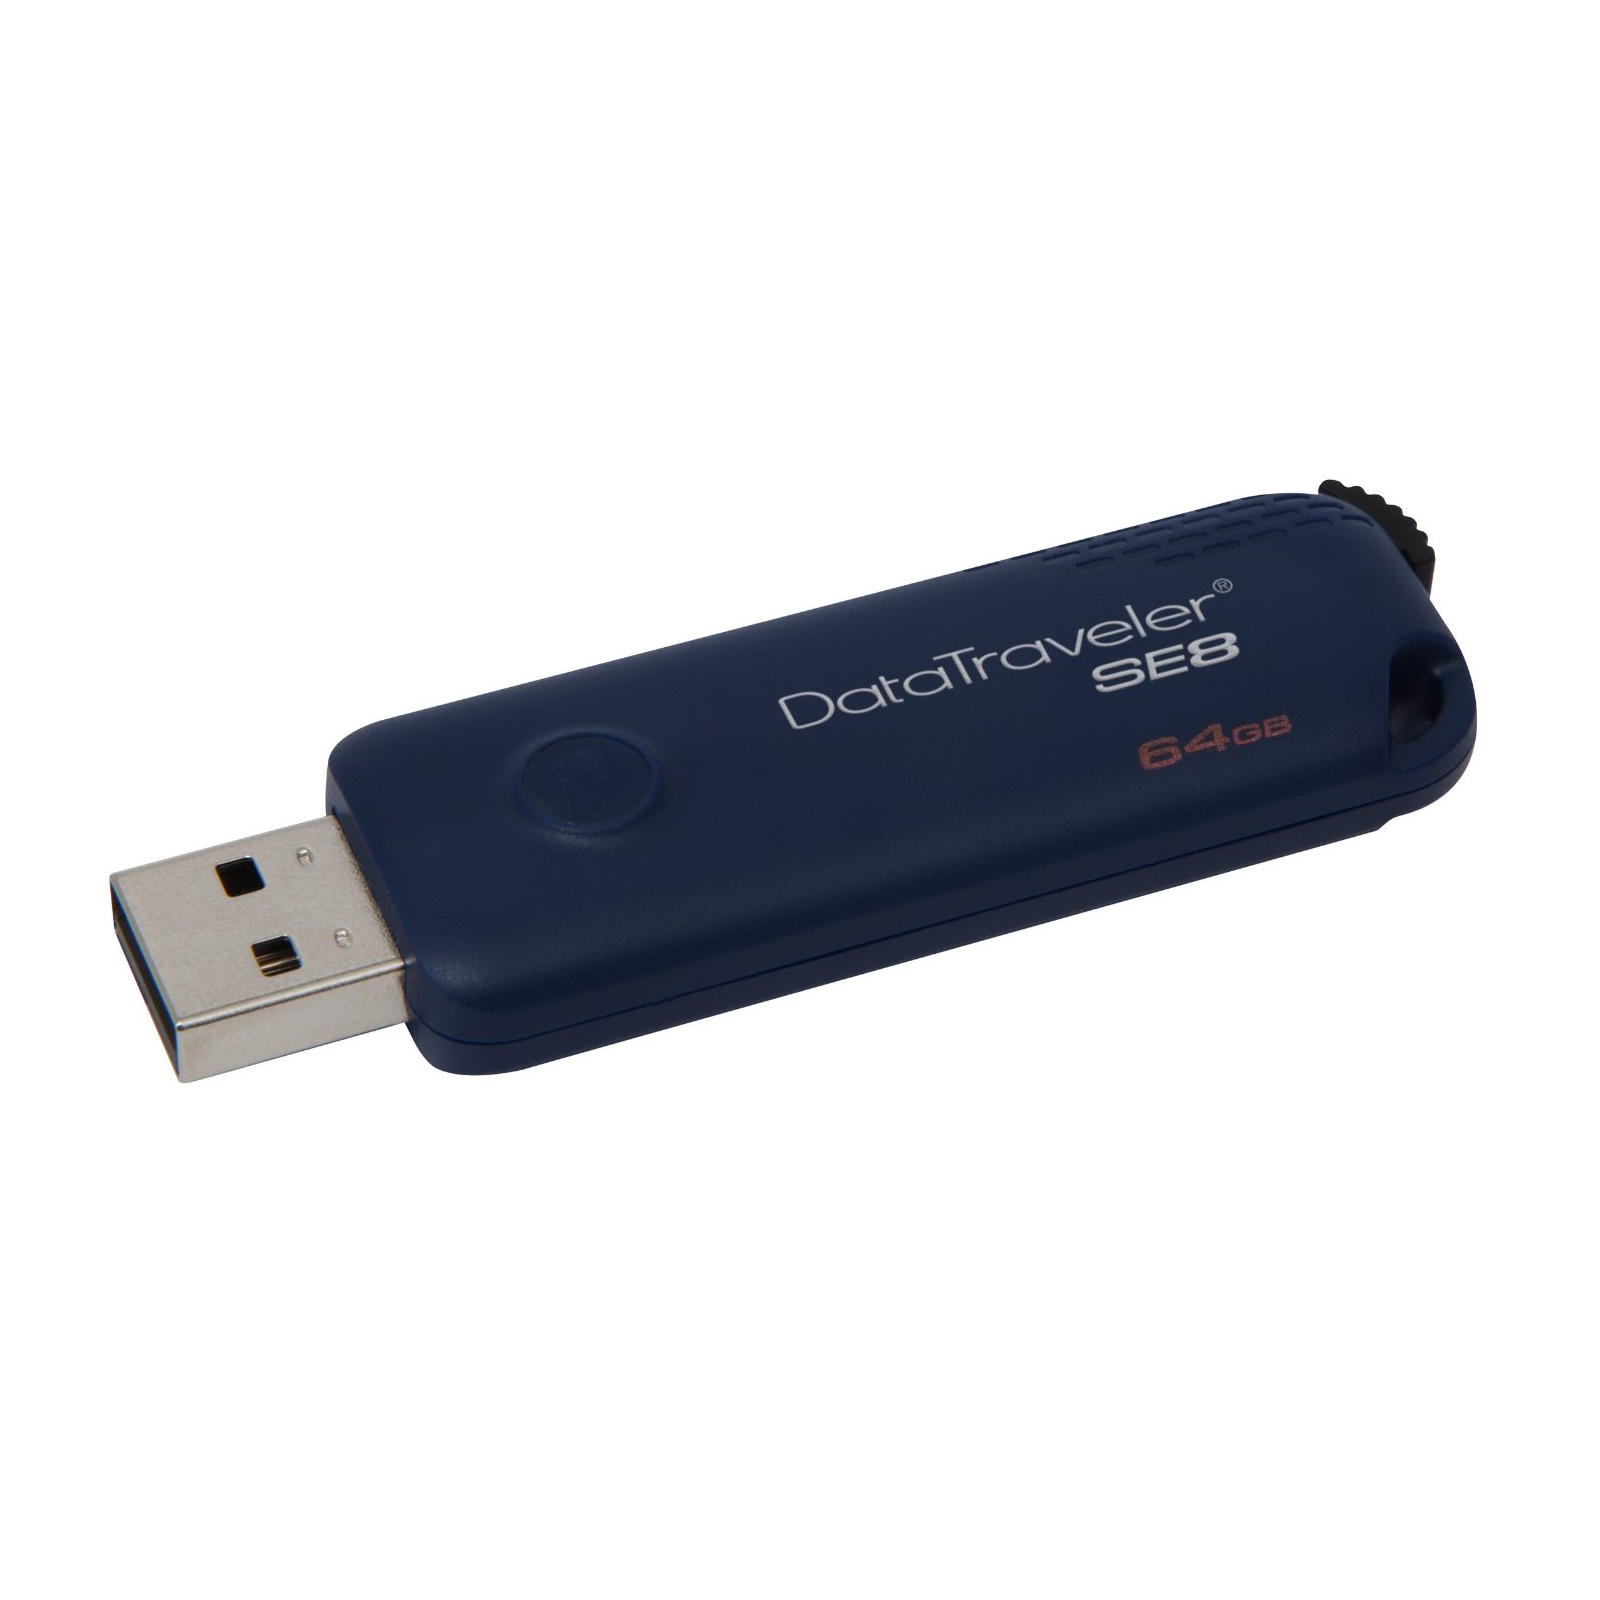 USB флеш накопитель Kingston 64GB DT SE 8 Blue USB 2.0 (DTSE8/64GB) изображение 5